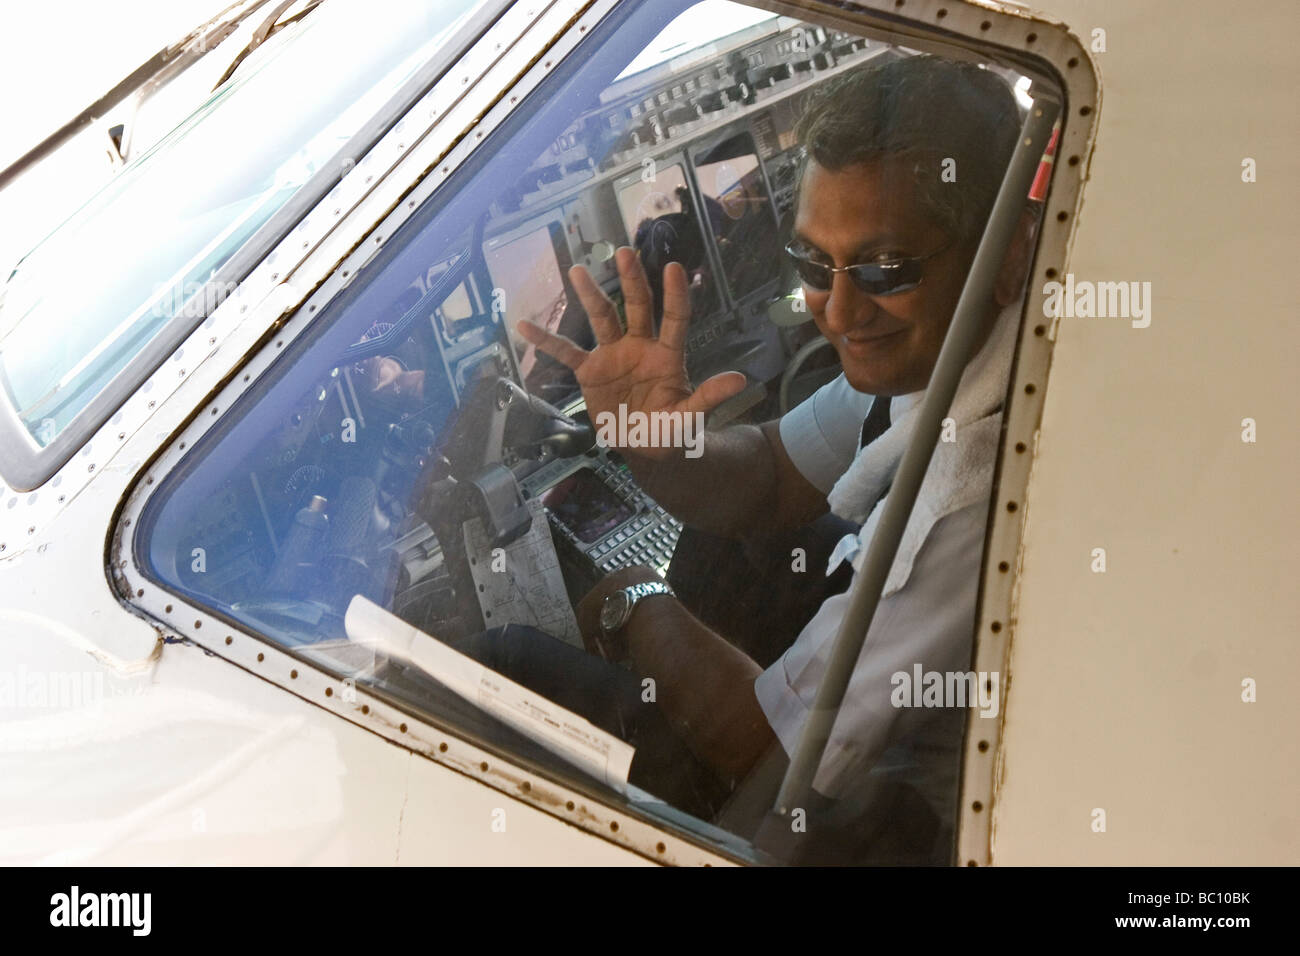 Airline pilot waving to passengers boarding plane Stock Photo